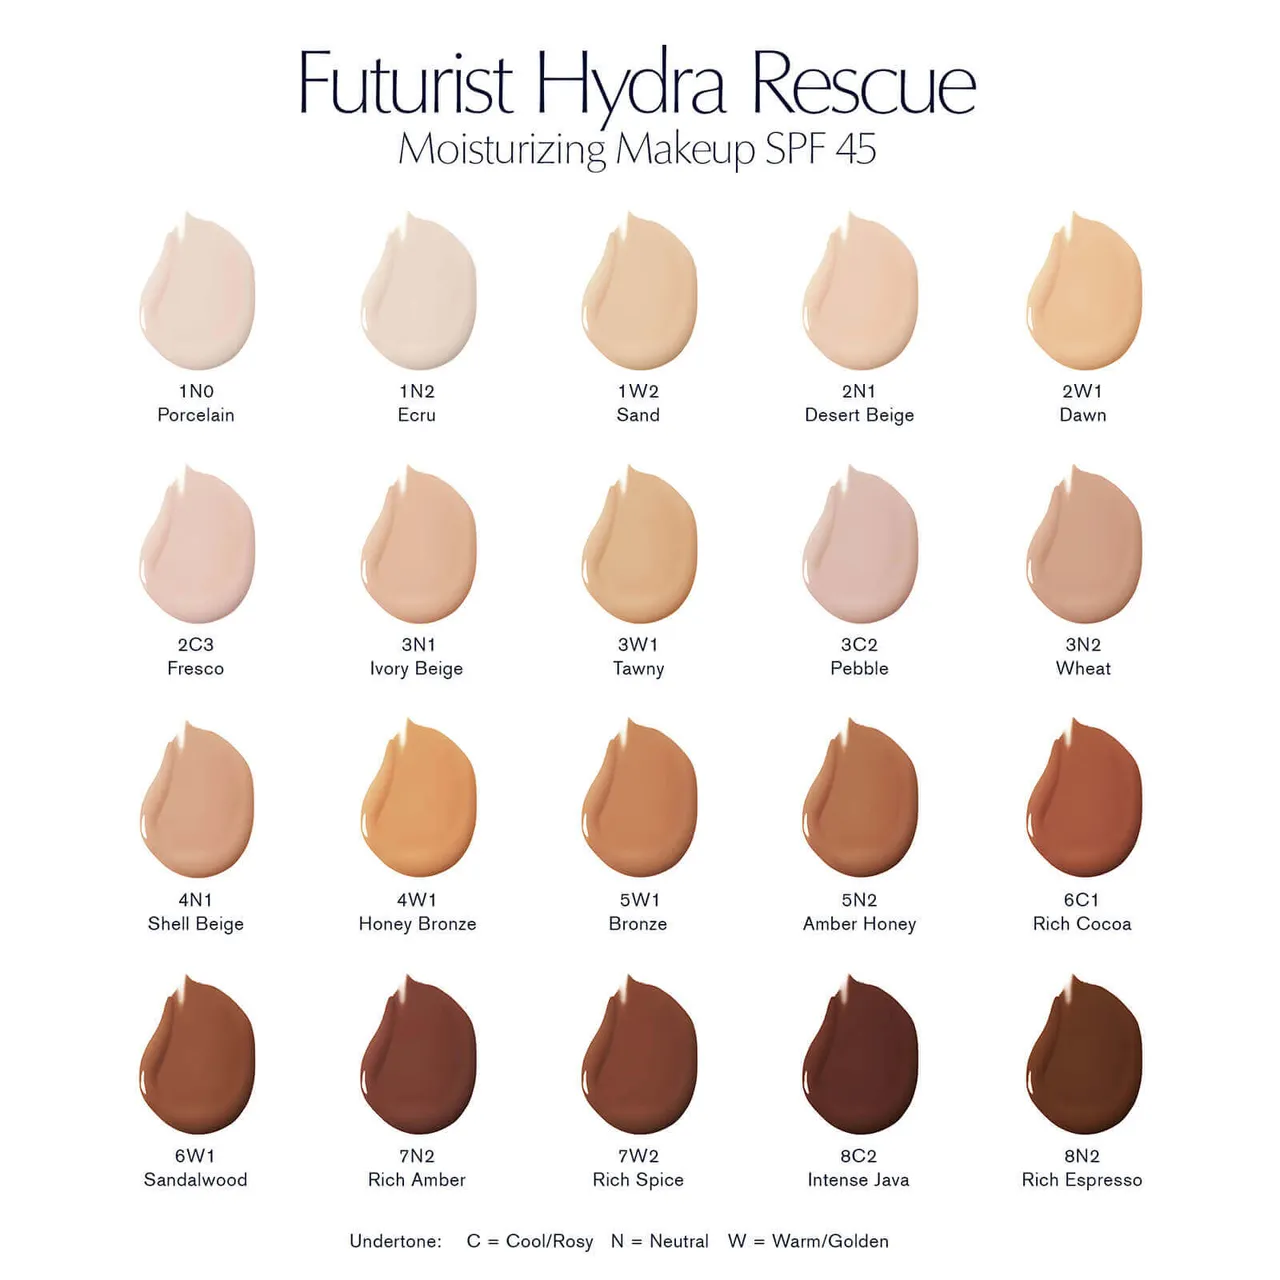 Estée Lauder Futurist Hydra Rescue Moisturizing Makeup Foundation SPF45 (Various Shades) - 7N2 Rich Amber